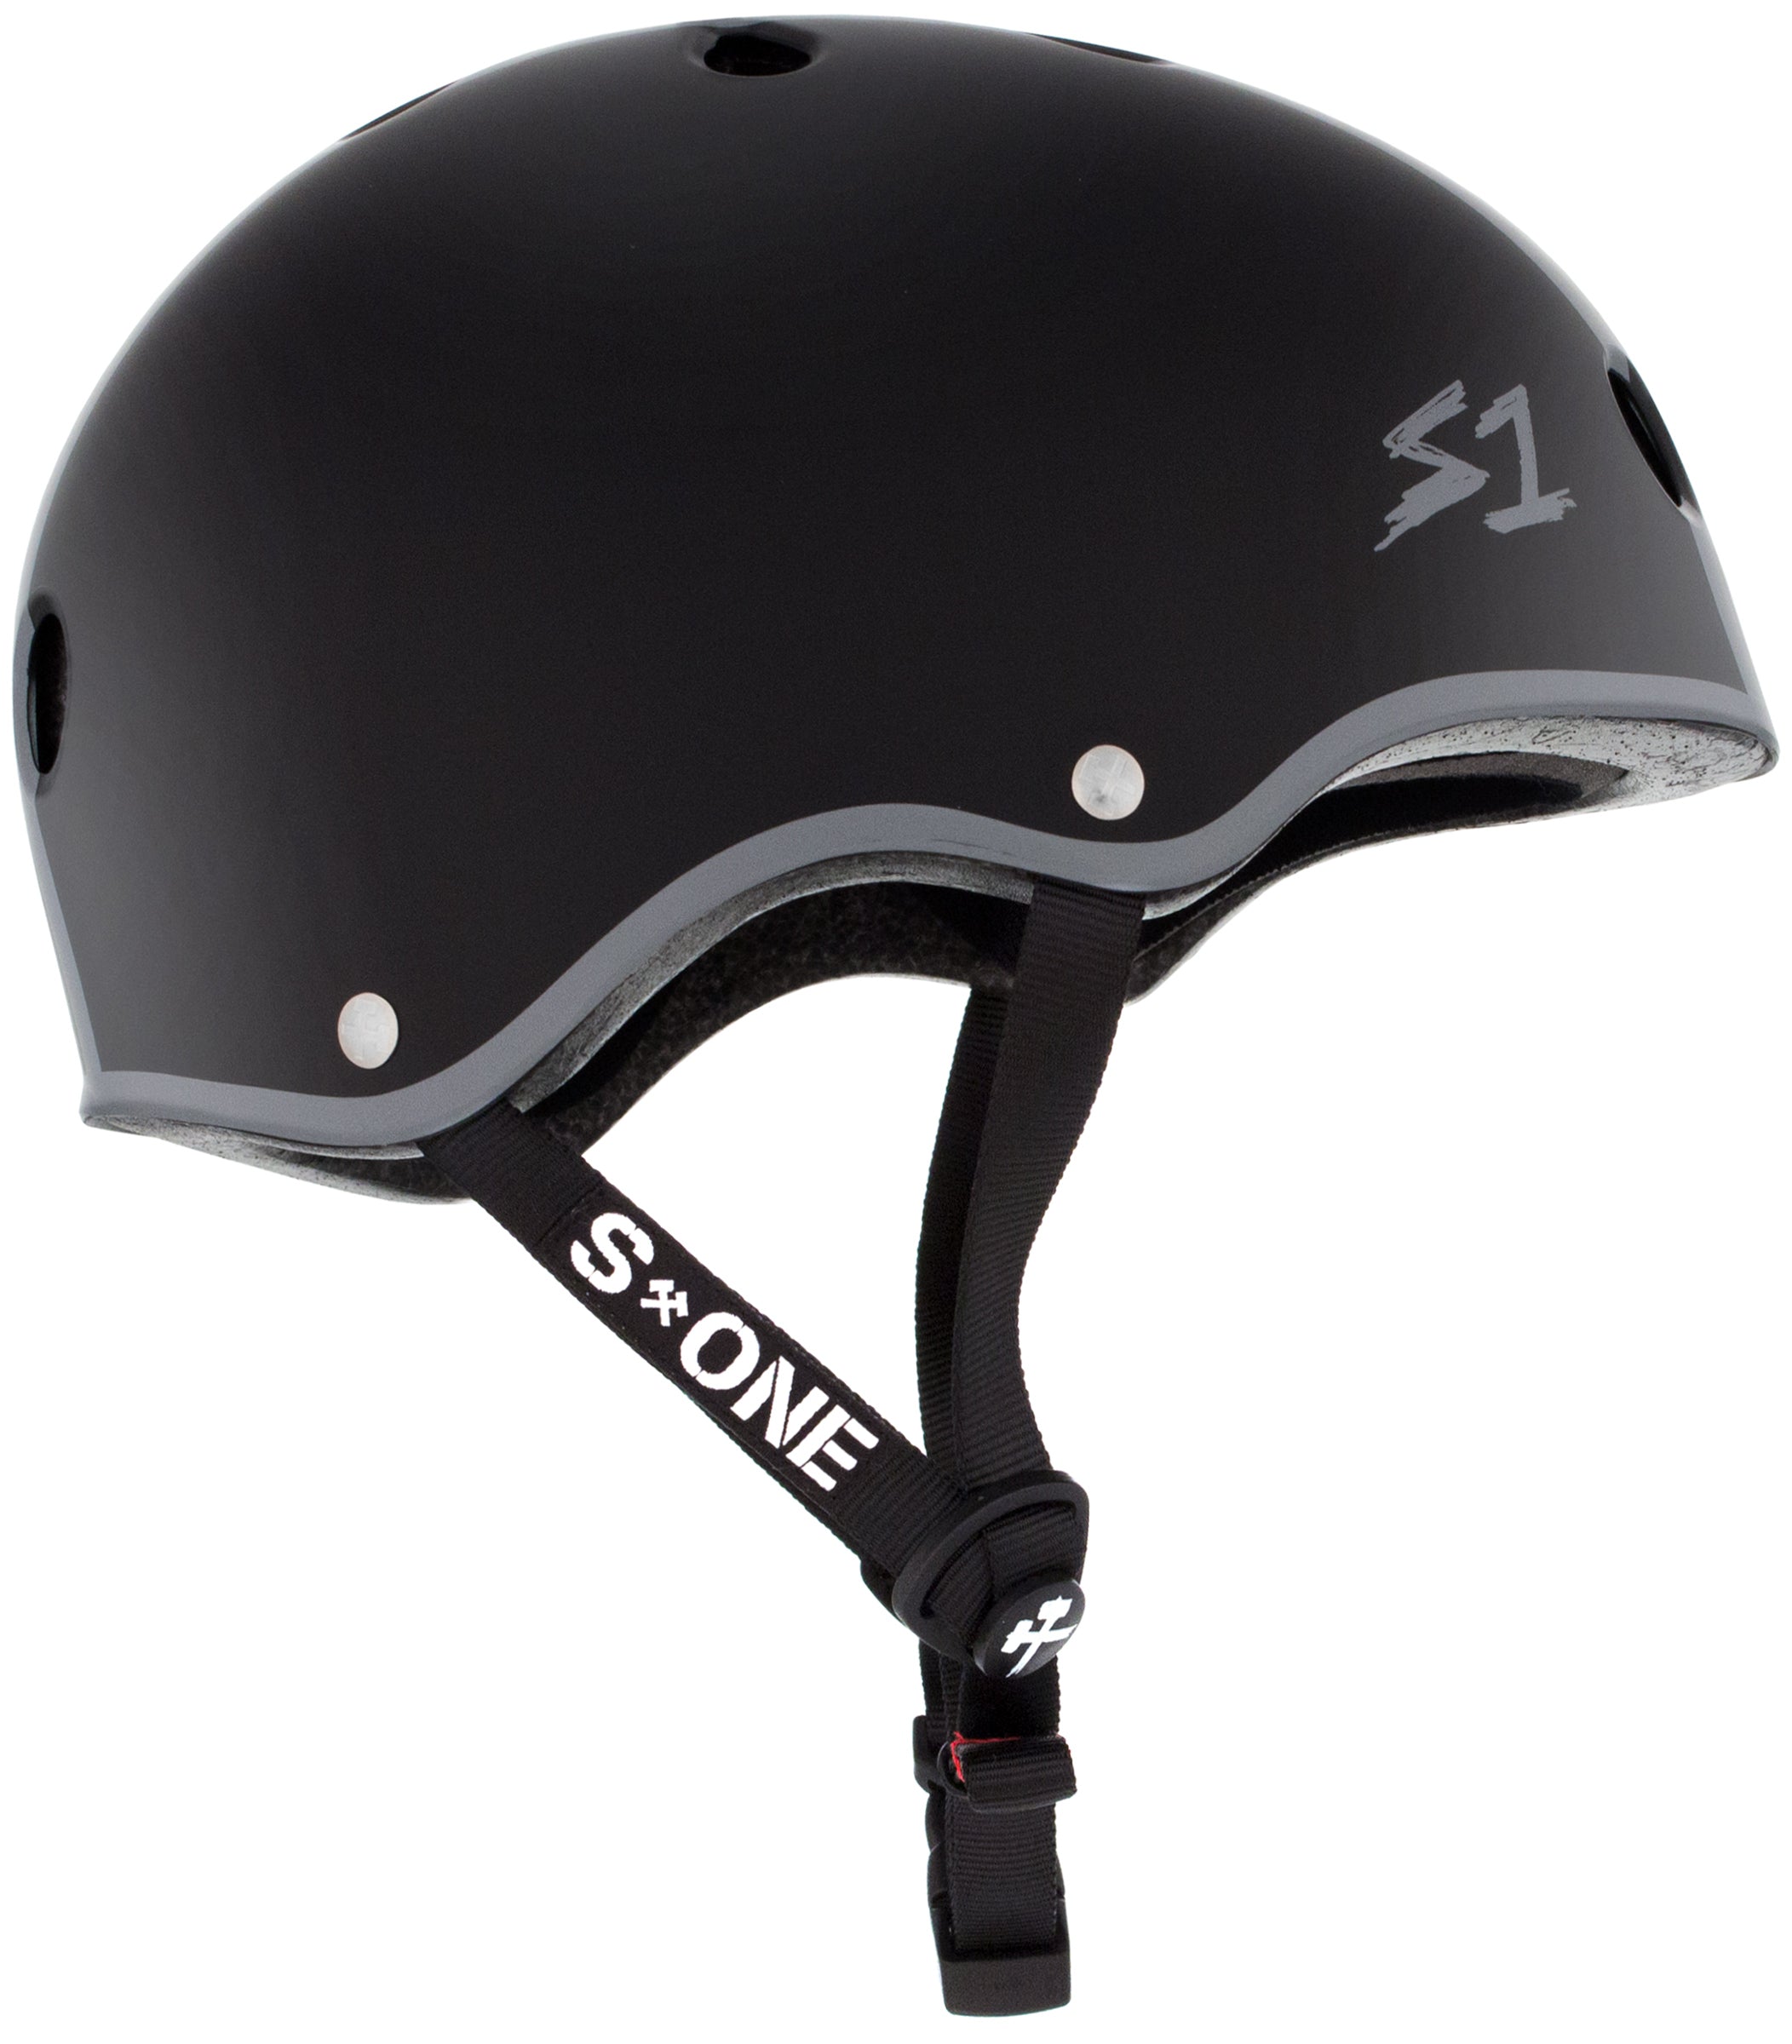 S1 Lifer Helmet - Helmet Black mast Bed